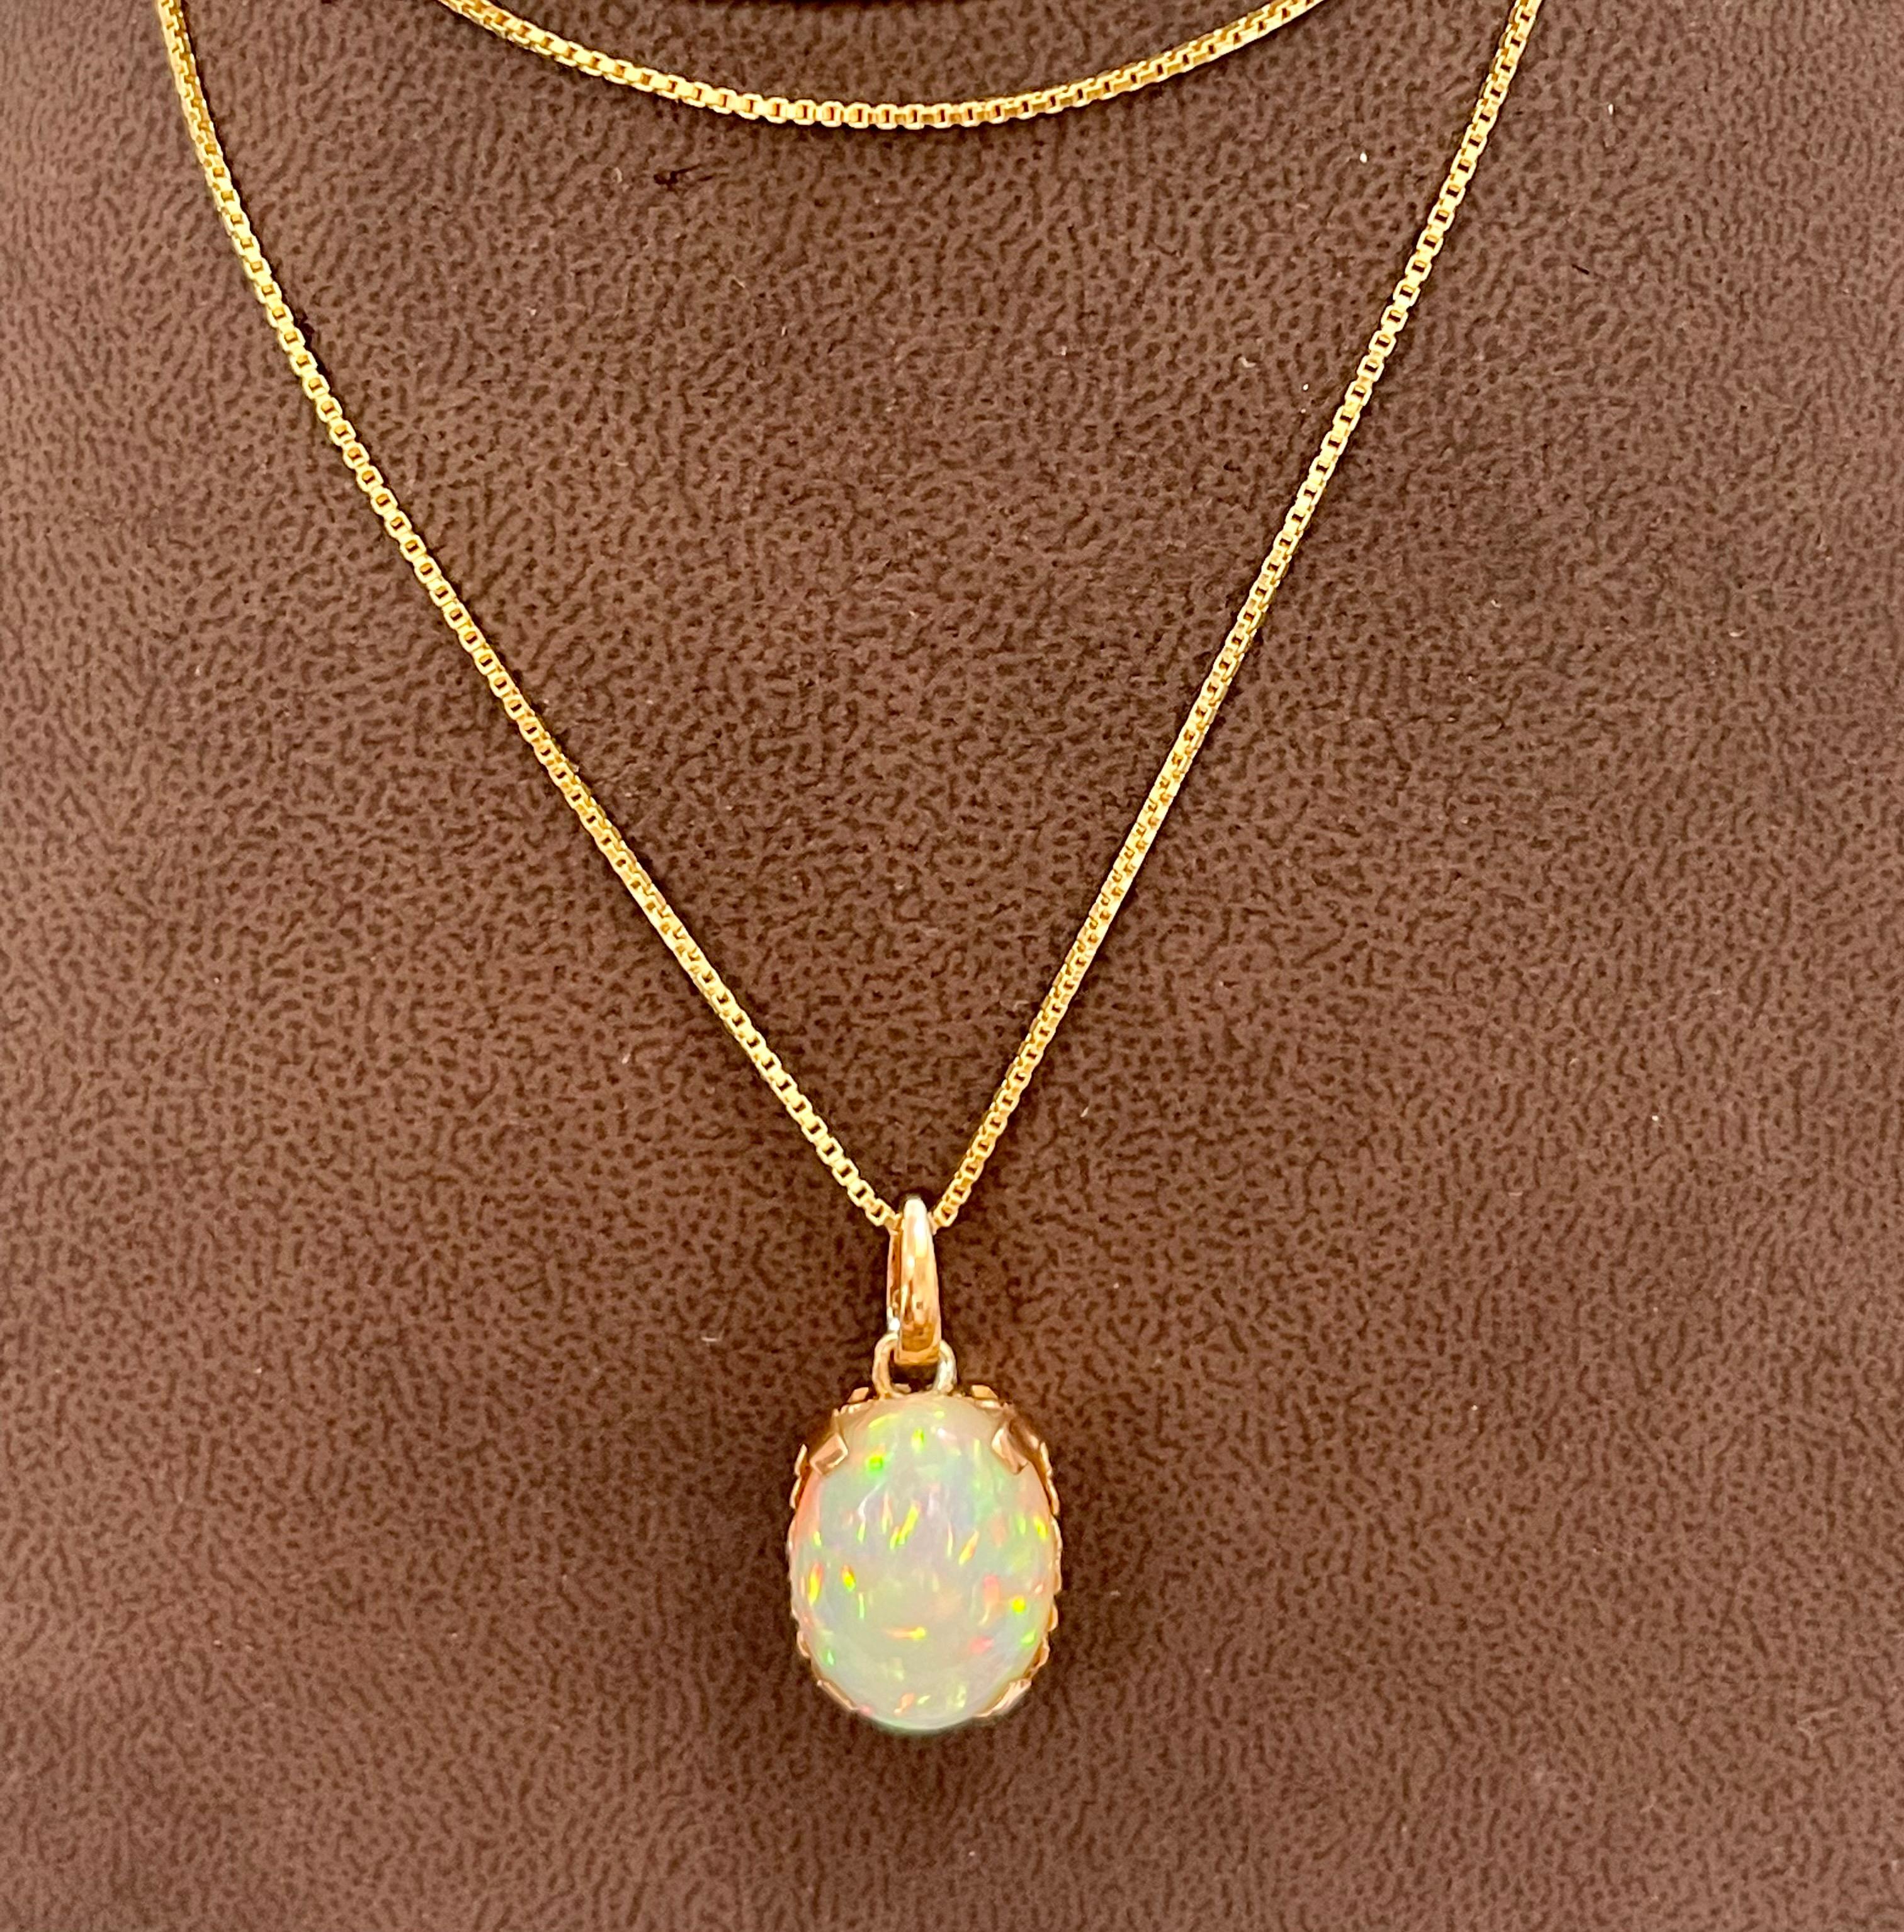 Oval Cut 9 Carat Oval Ethiopian Opal Pendant / Necklace 18 Karat + 18 Kt Gold Chain